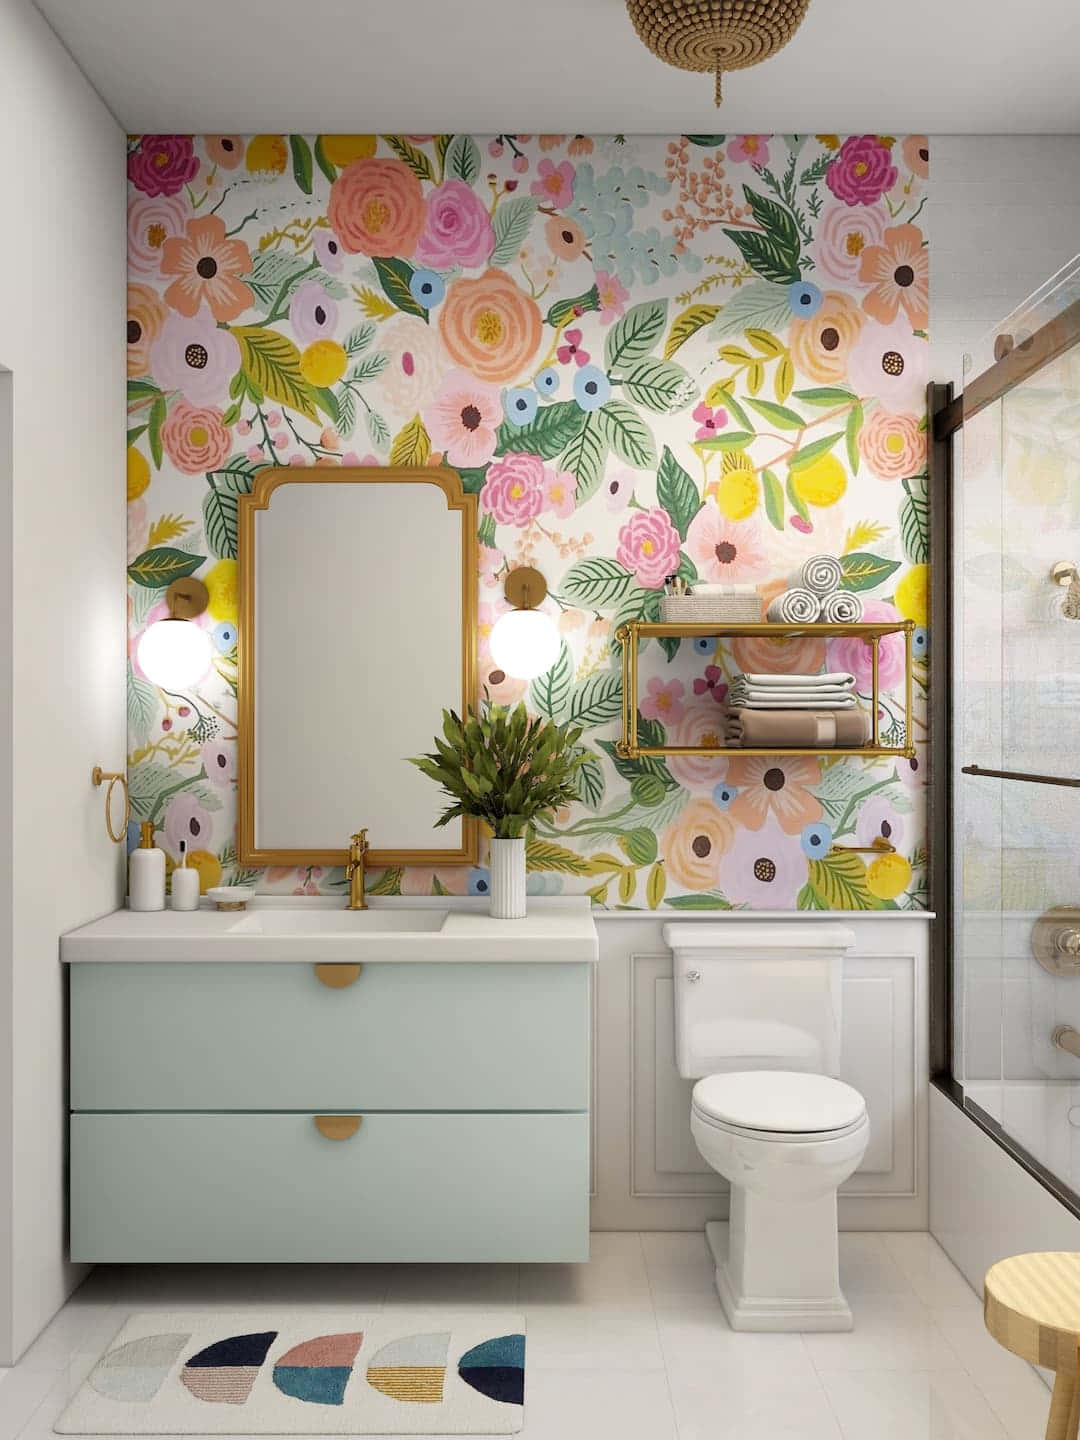 Buntesblumenmuster Als Badezimmer-dekorationsbild